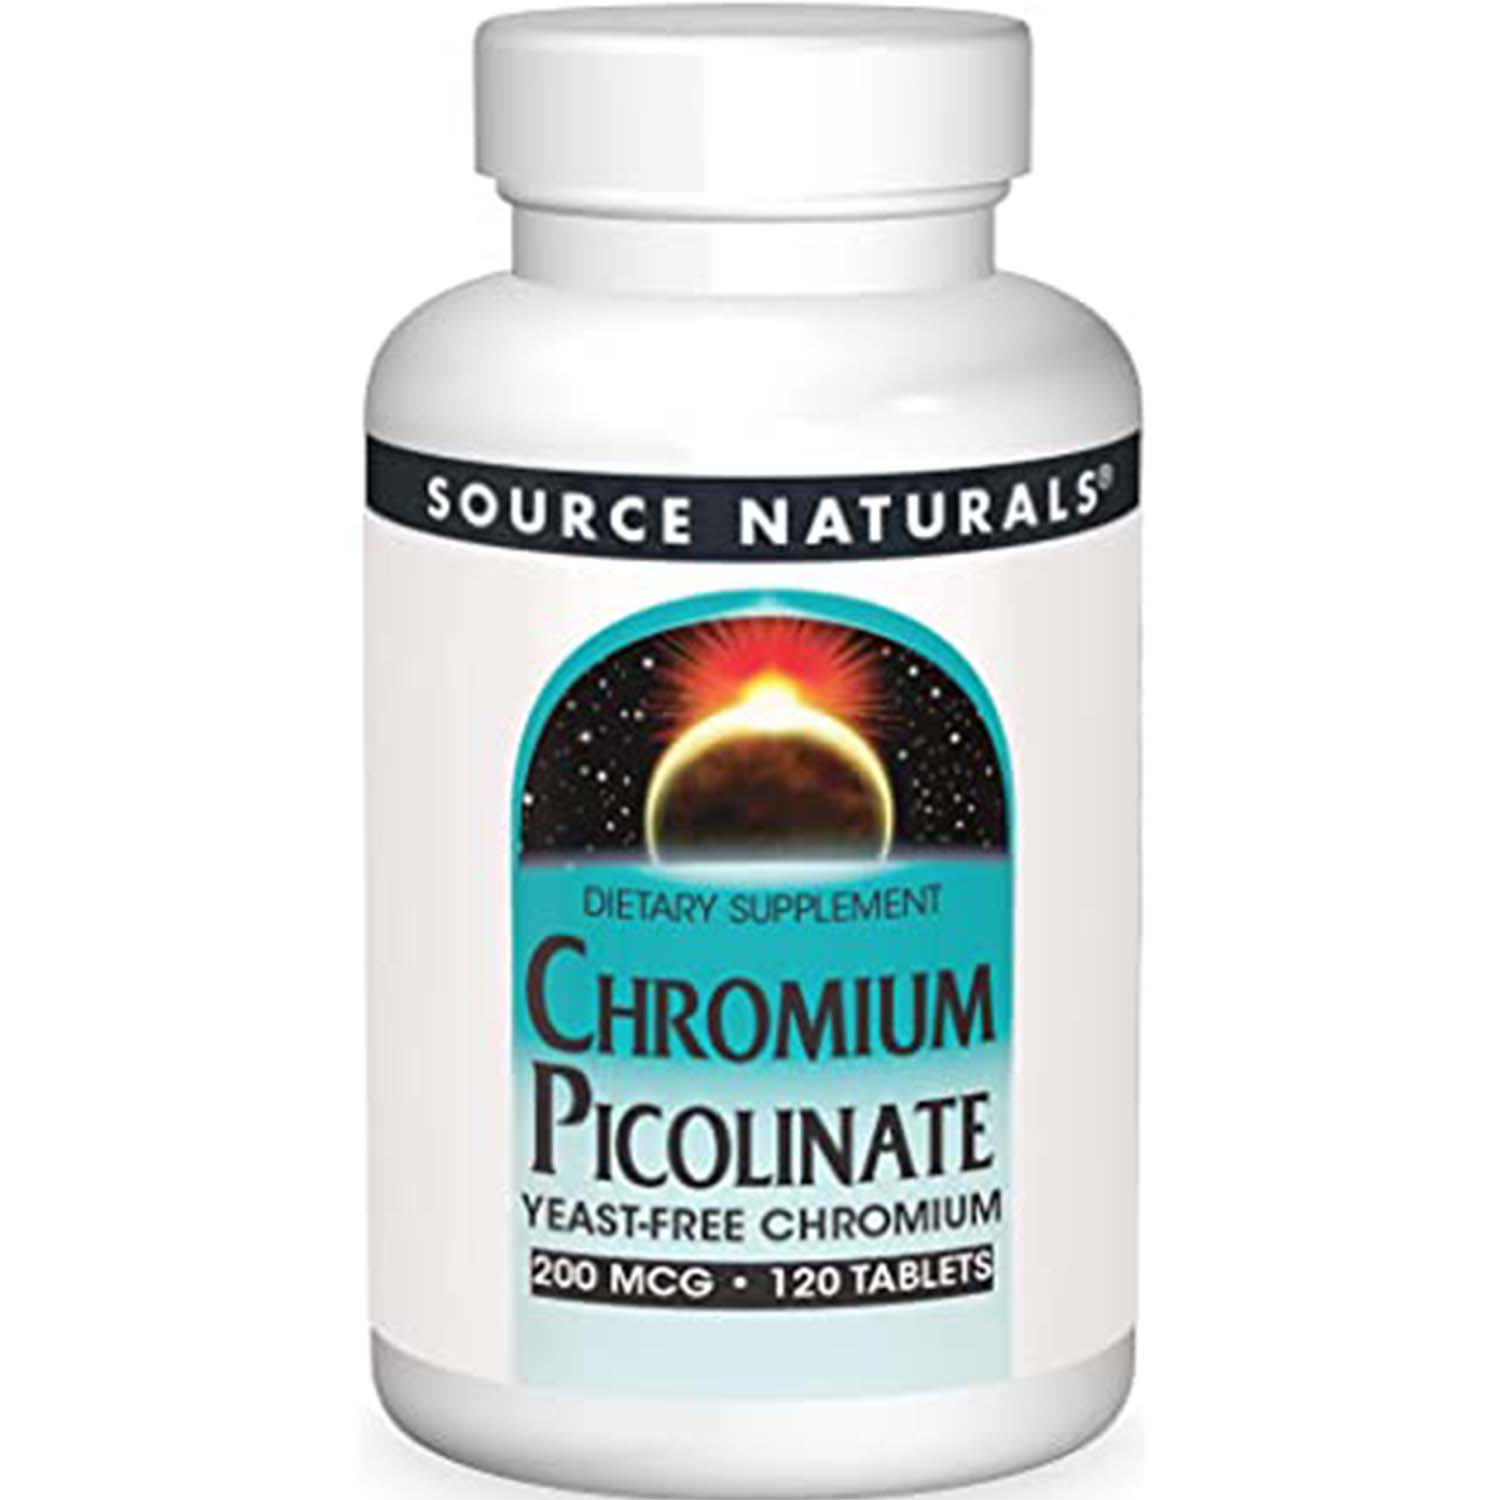 Source Naturals Chromium Picolinate, 200 mcg, 120 Tablets